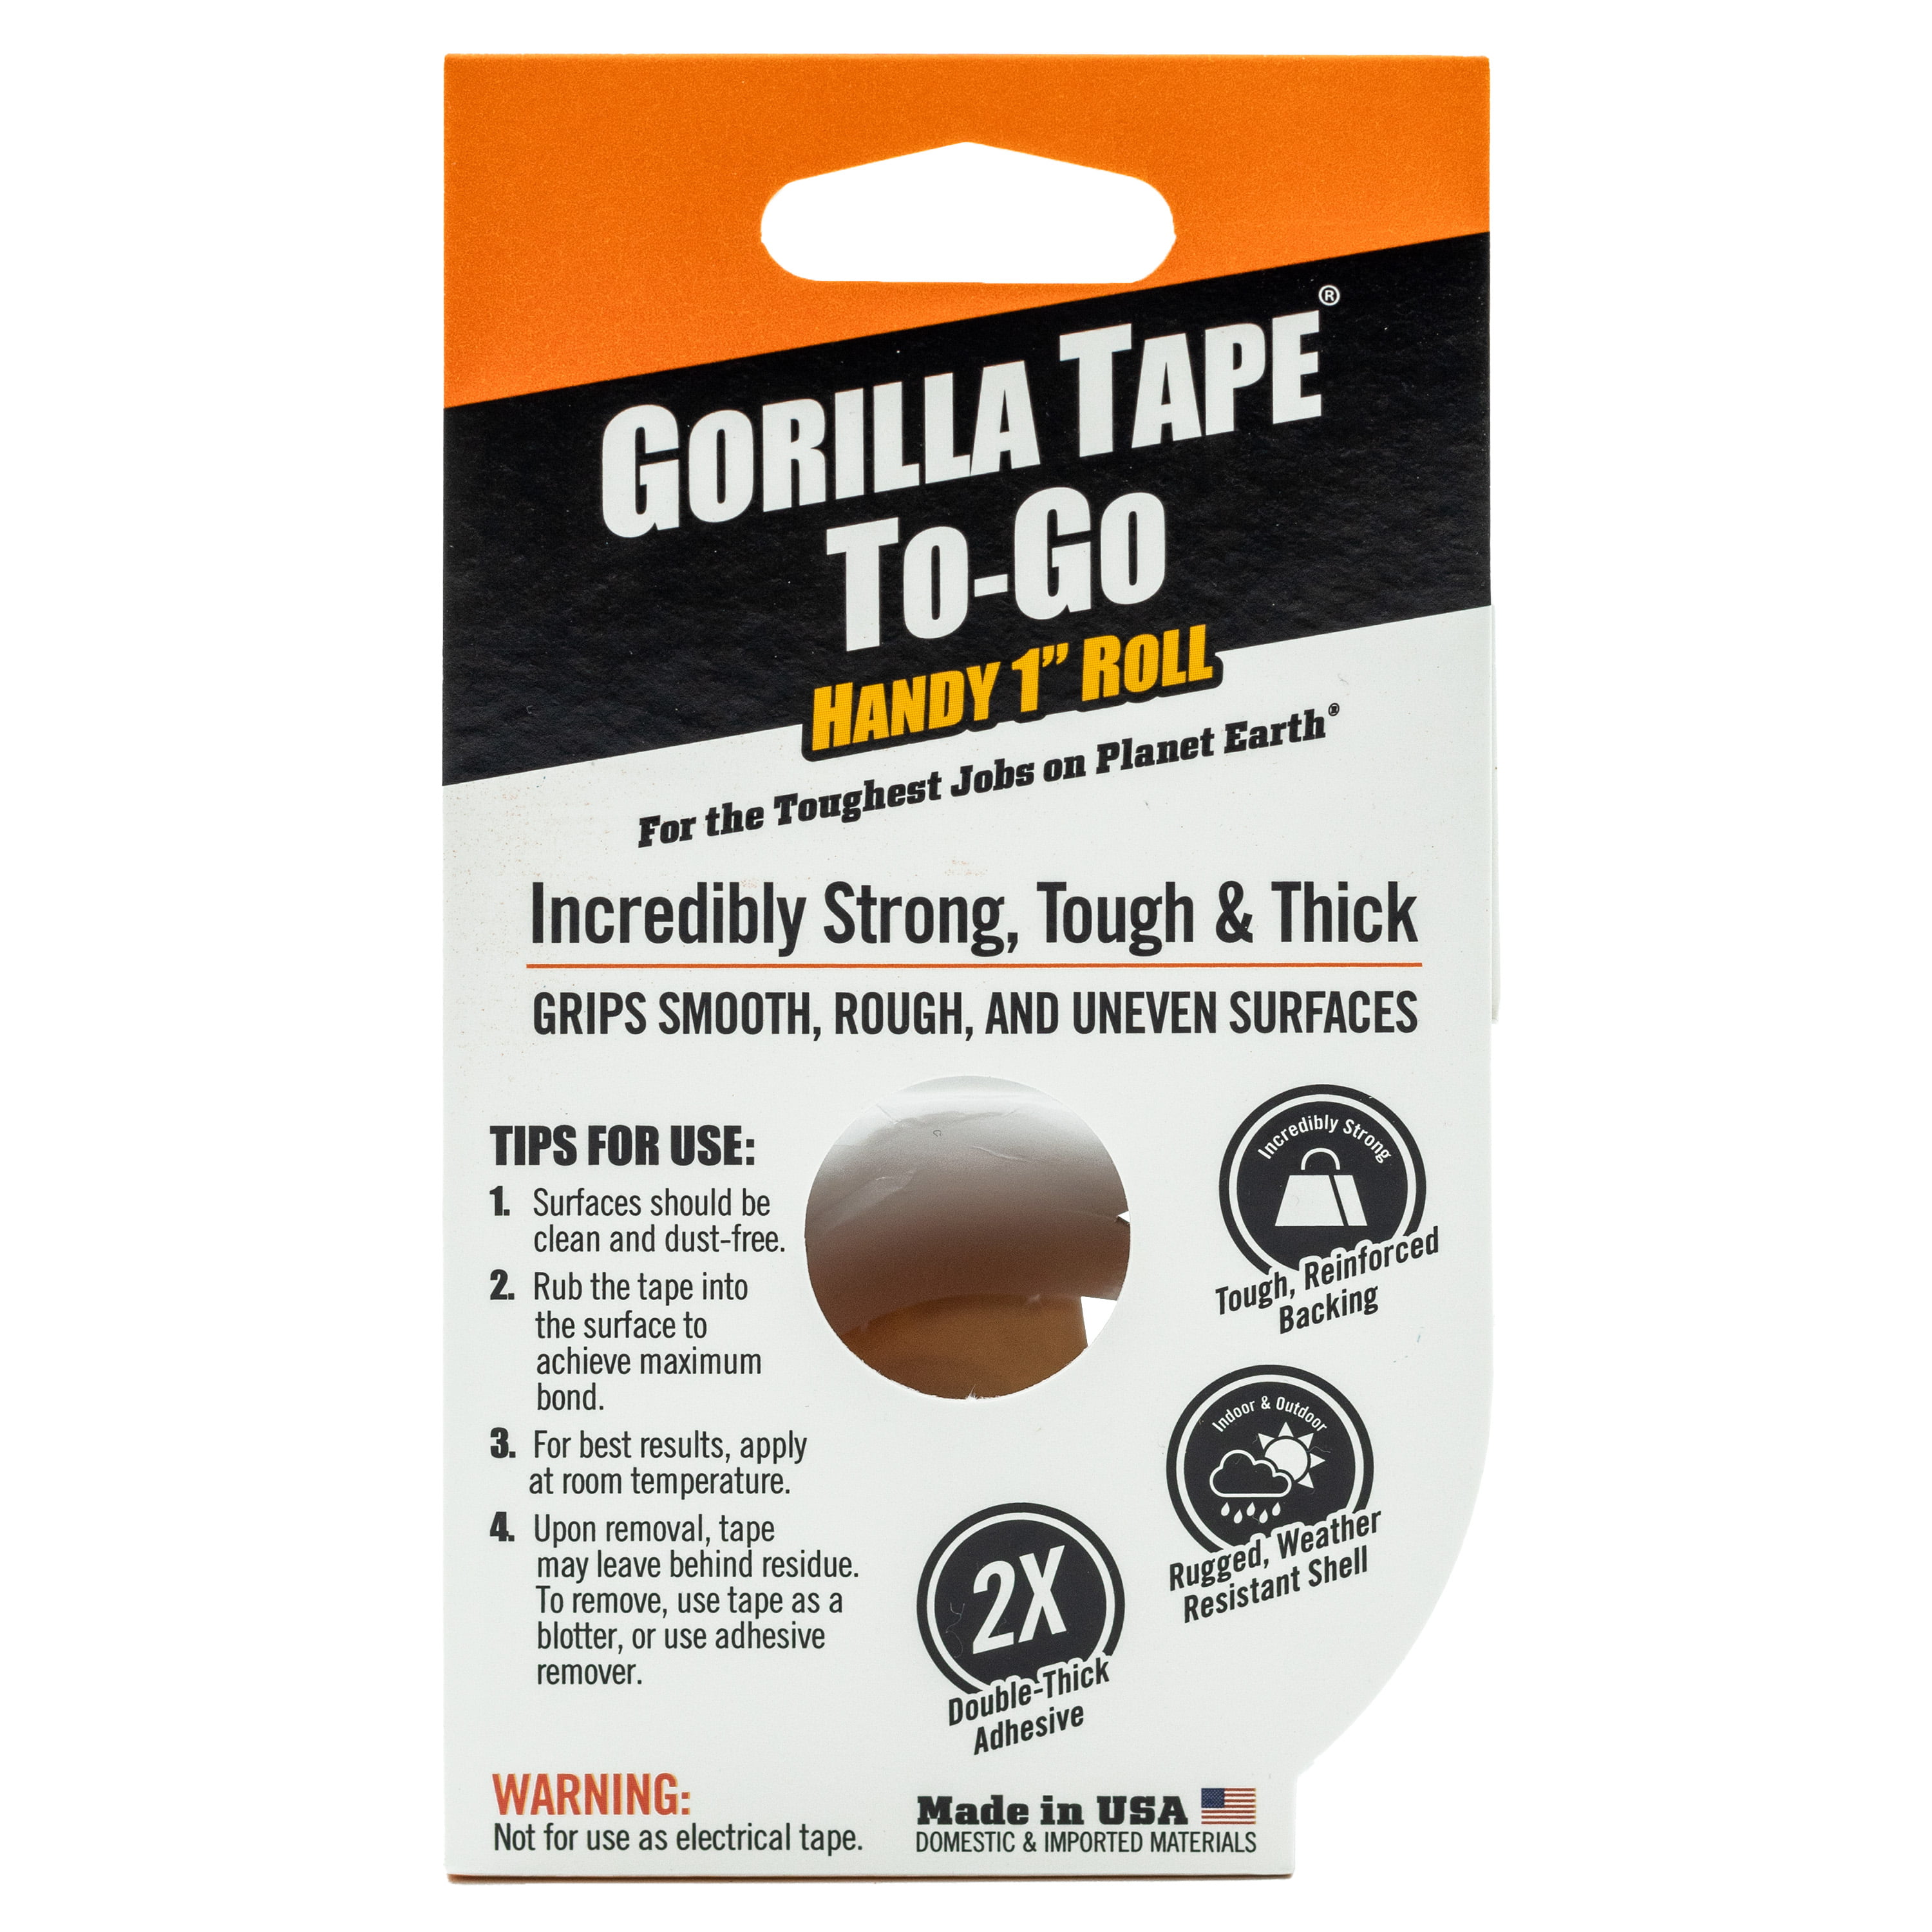 Goat Tape Archives » Gorilla Store